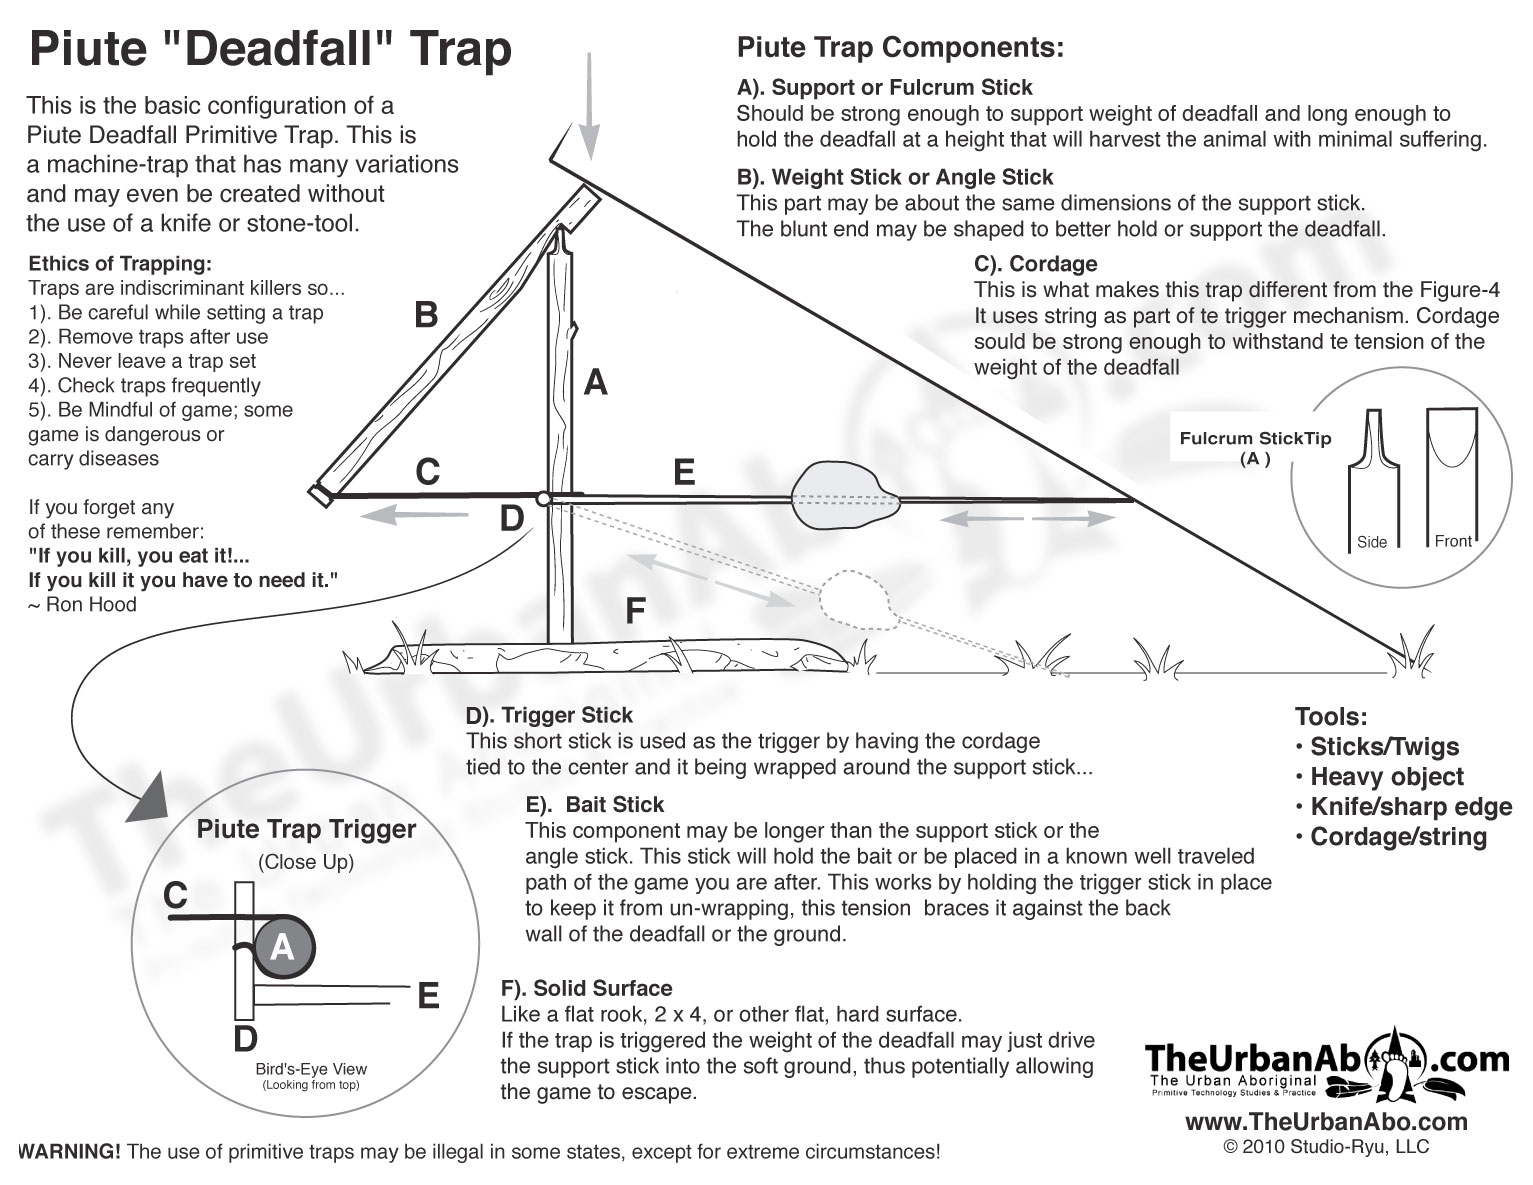  How to: Make The Piute Dead-Fall Trap 